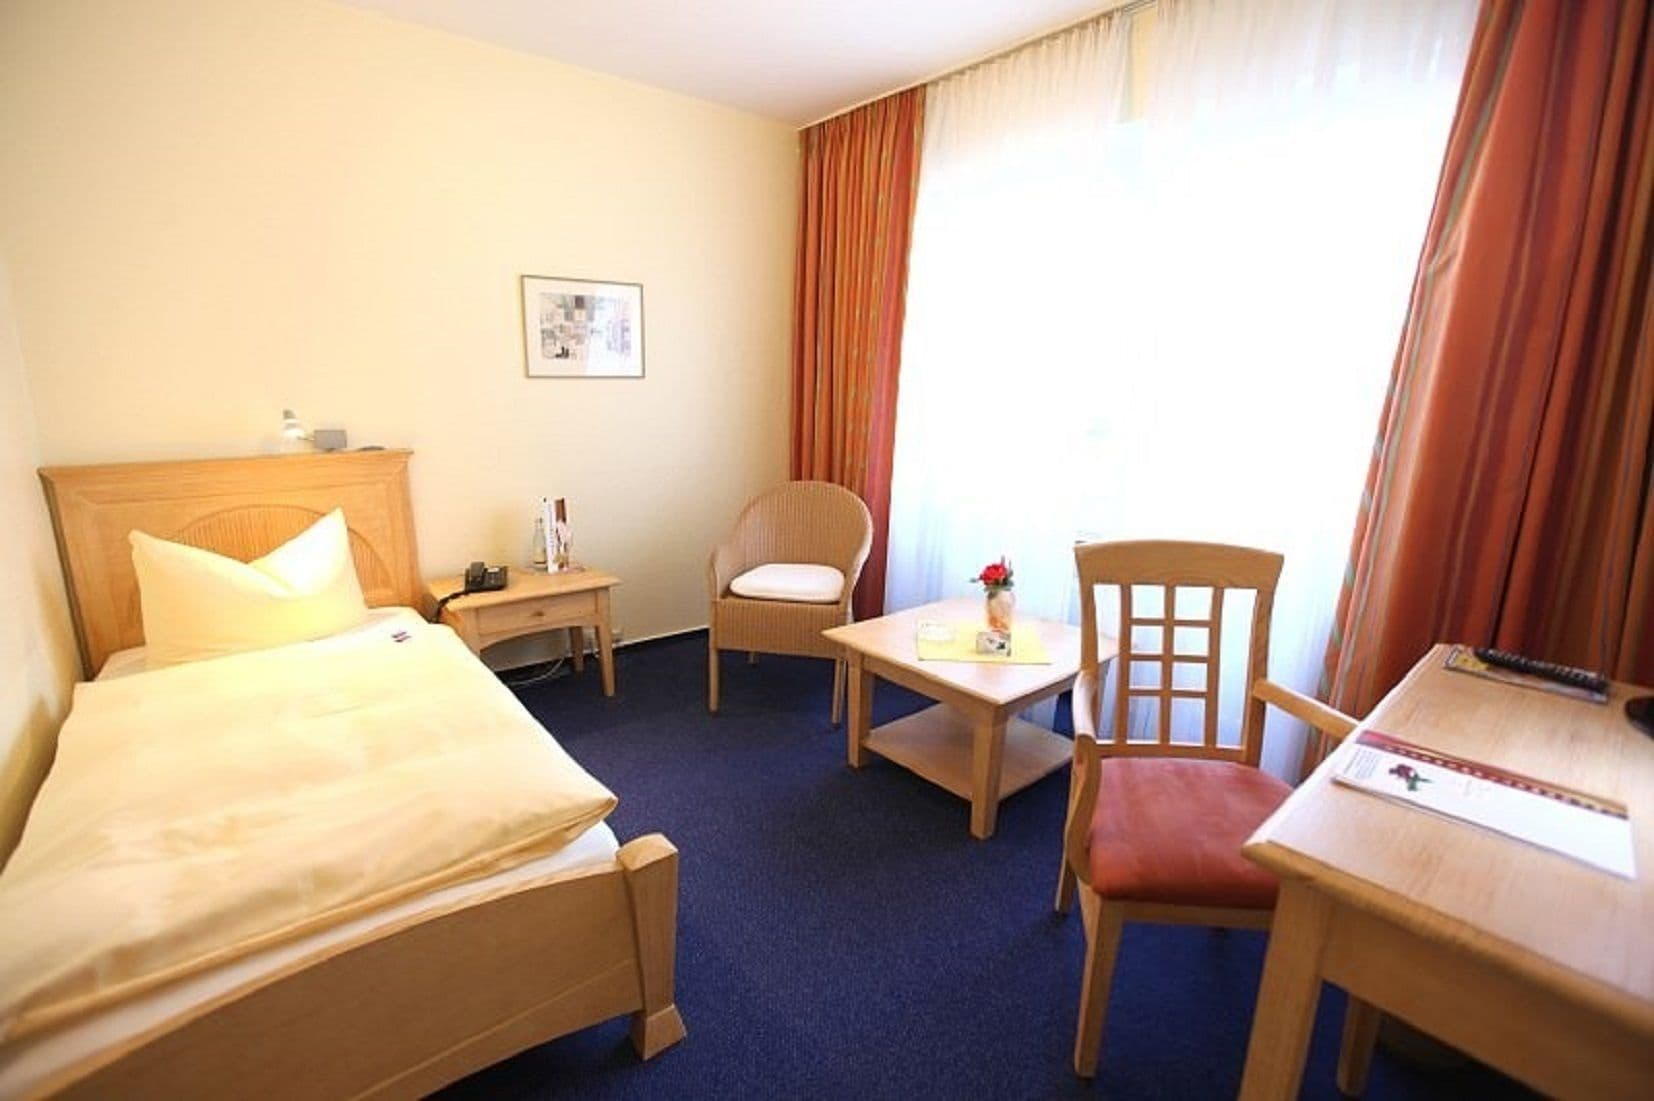 Room 3, Hotel Zur Post, Osnabrück